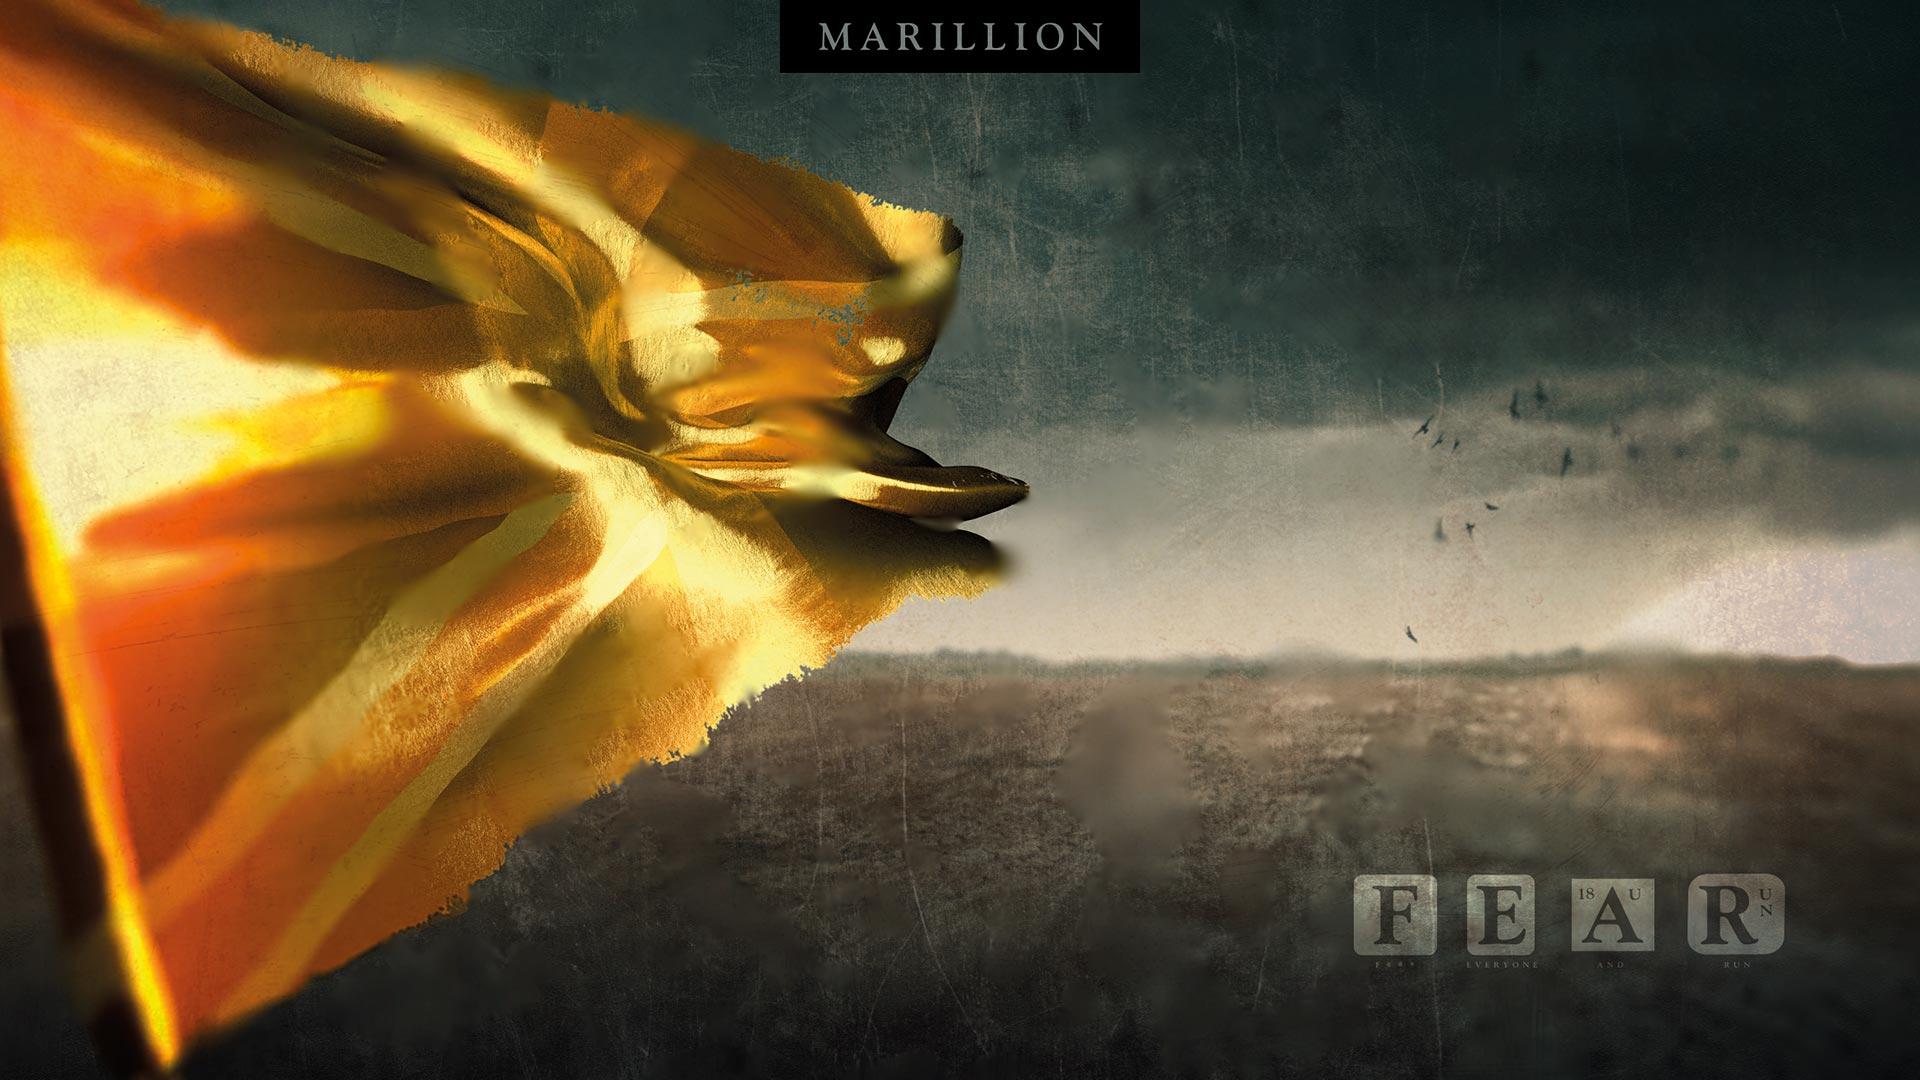 marillion.com. The Official Marillion Website